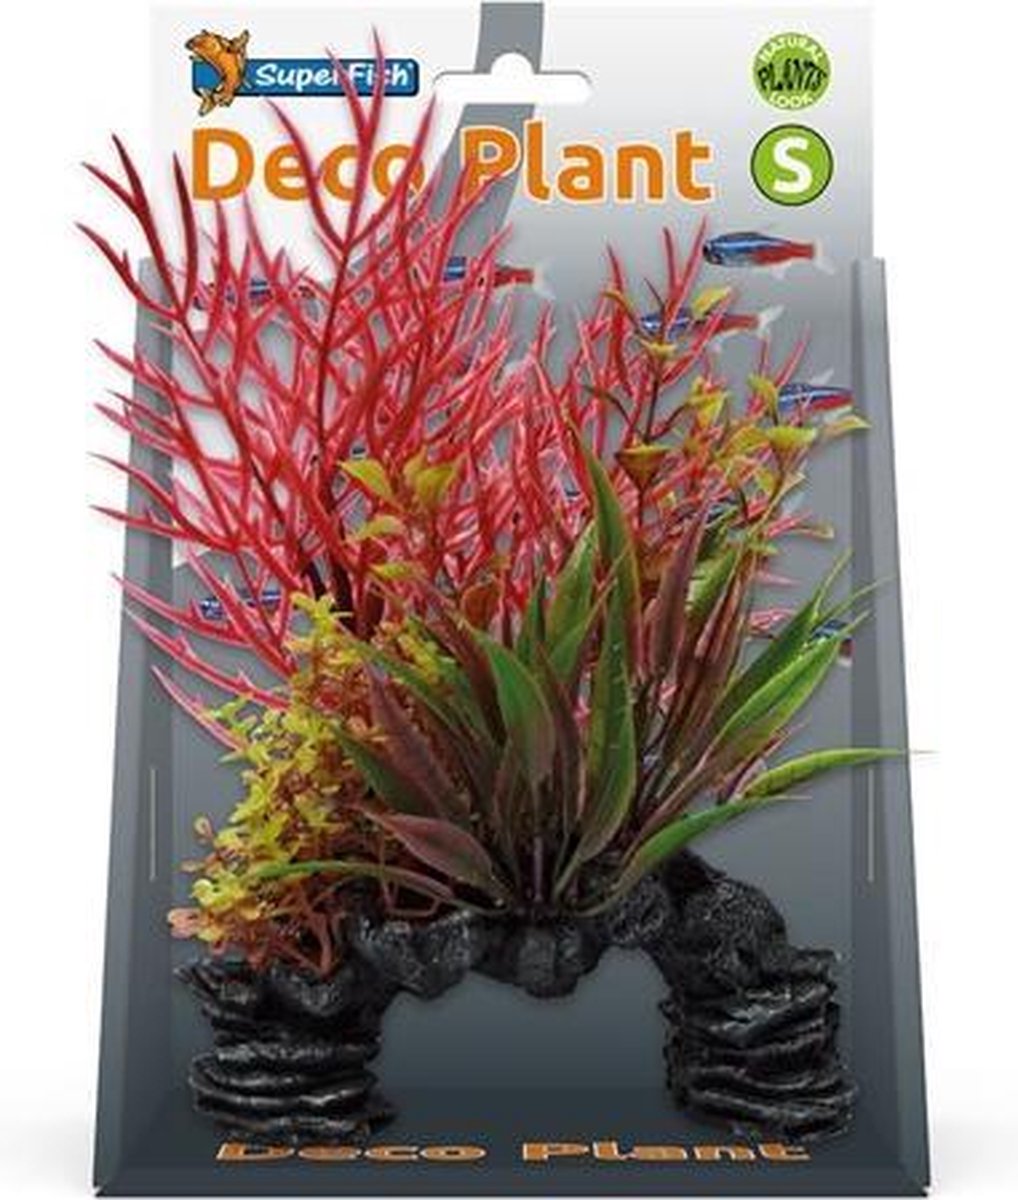 SuperFish Deco Plant S Ludwigia